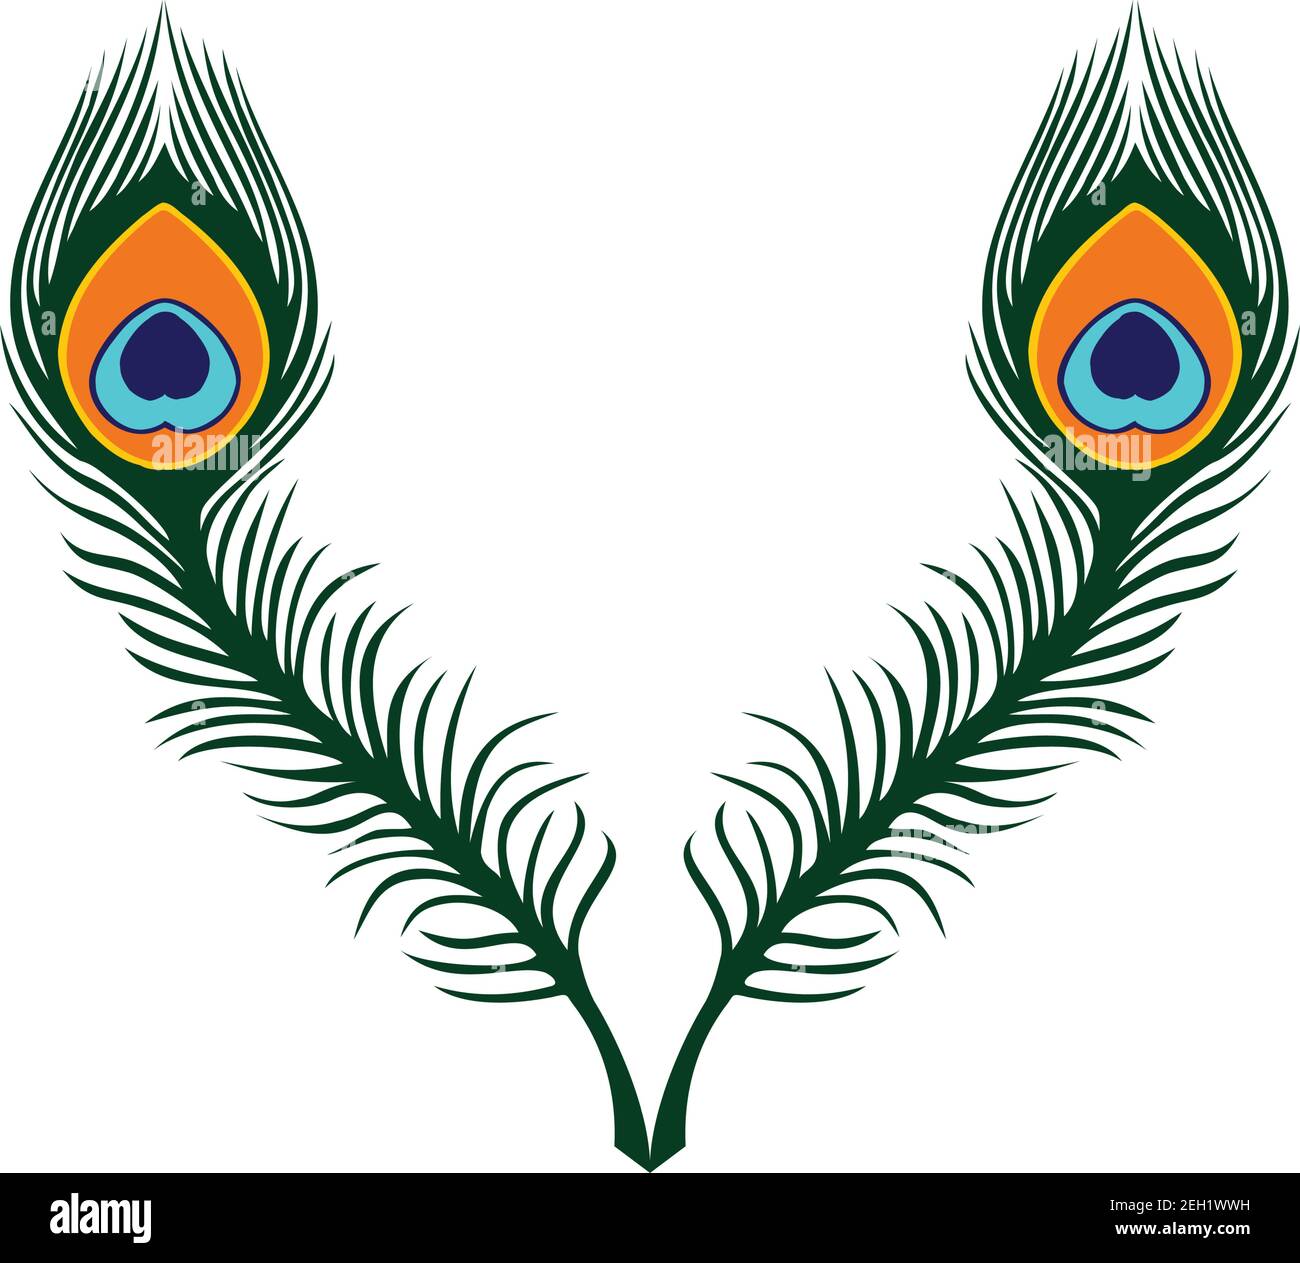 Arte de plumas de pavo real fotografías e imágenes de alta resolución -  Alamy